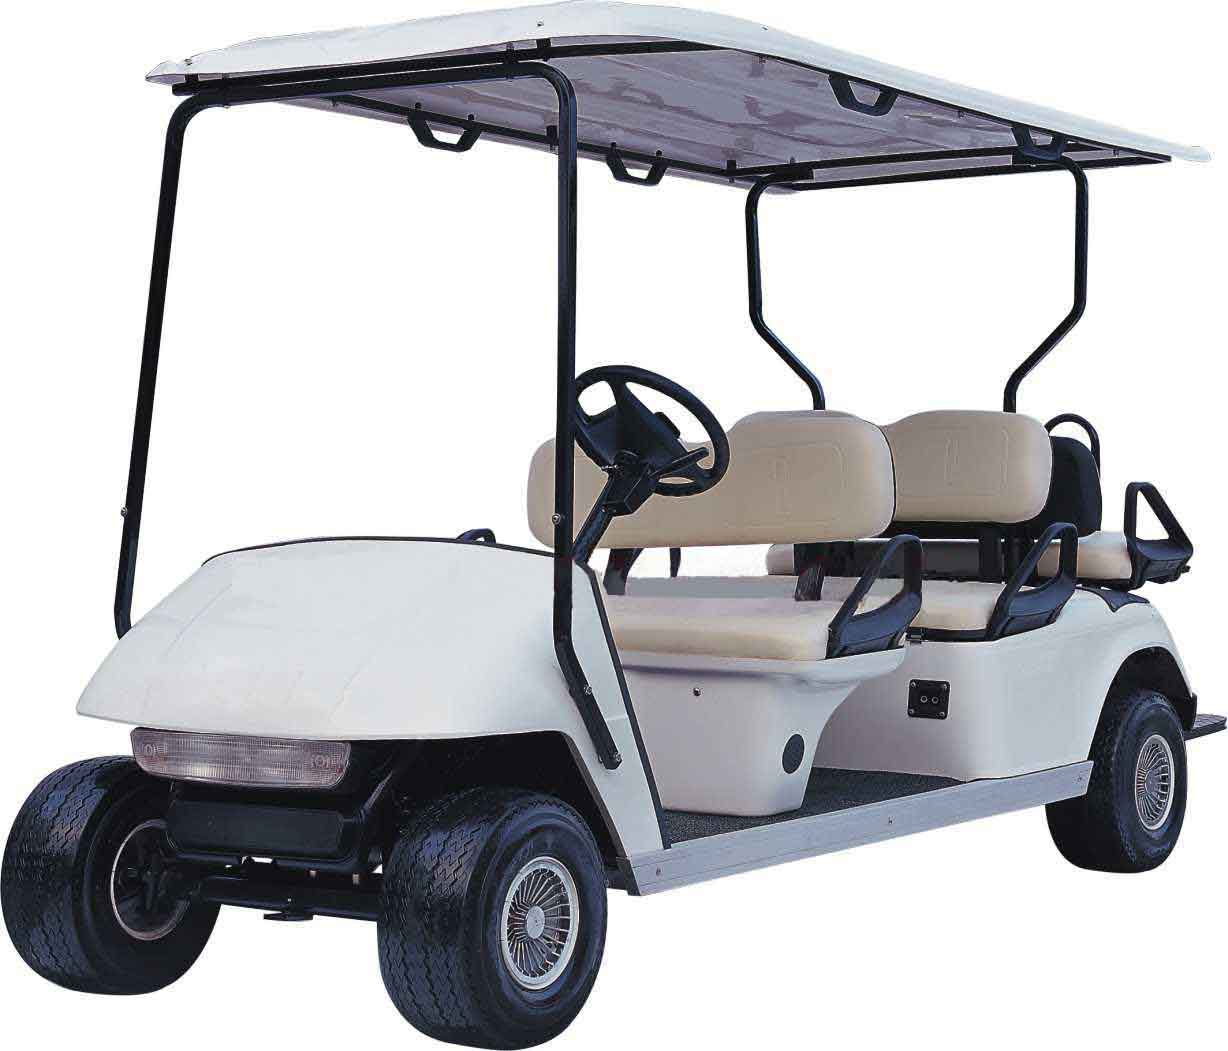 Electric Golf Cart Oc Gc | Free Images at Clker.com ...